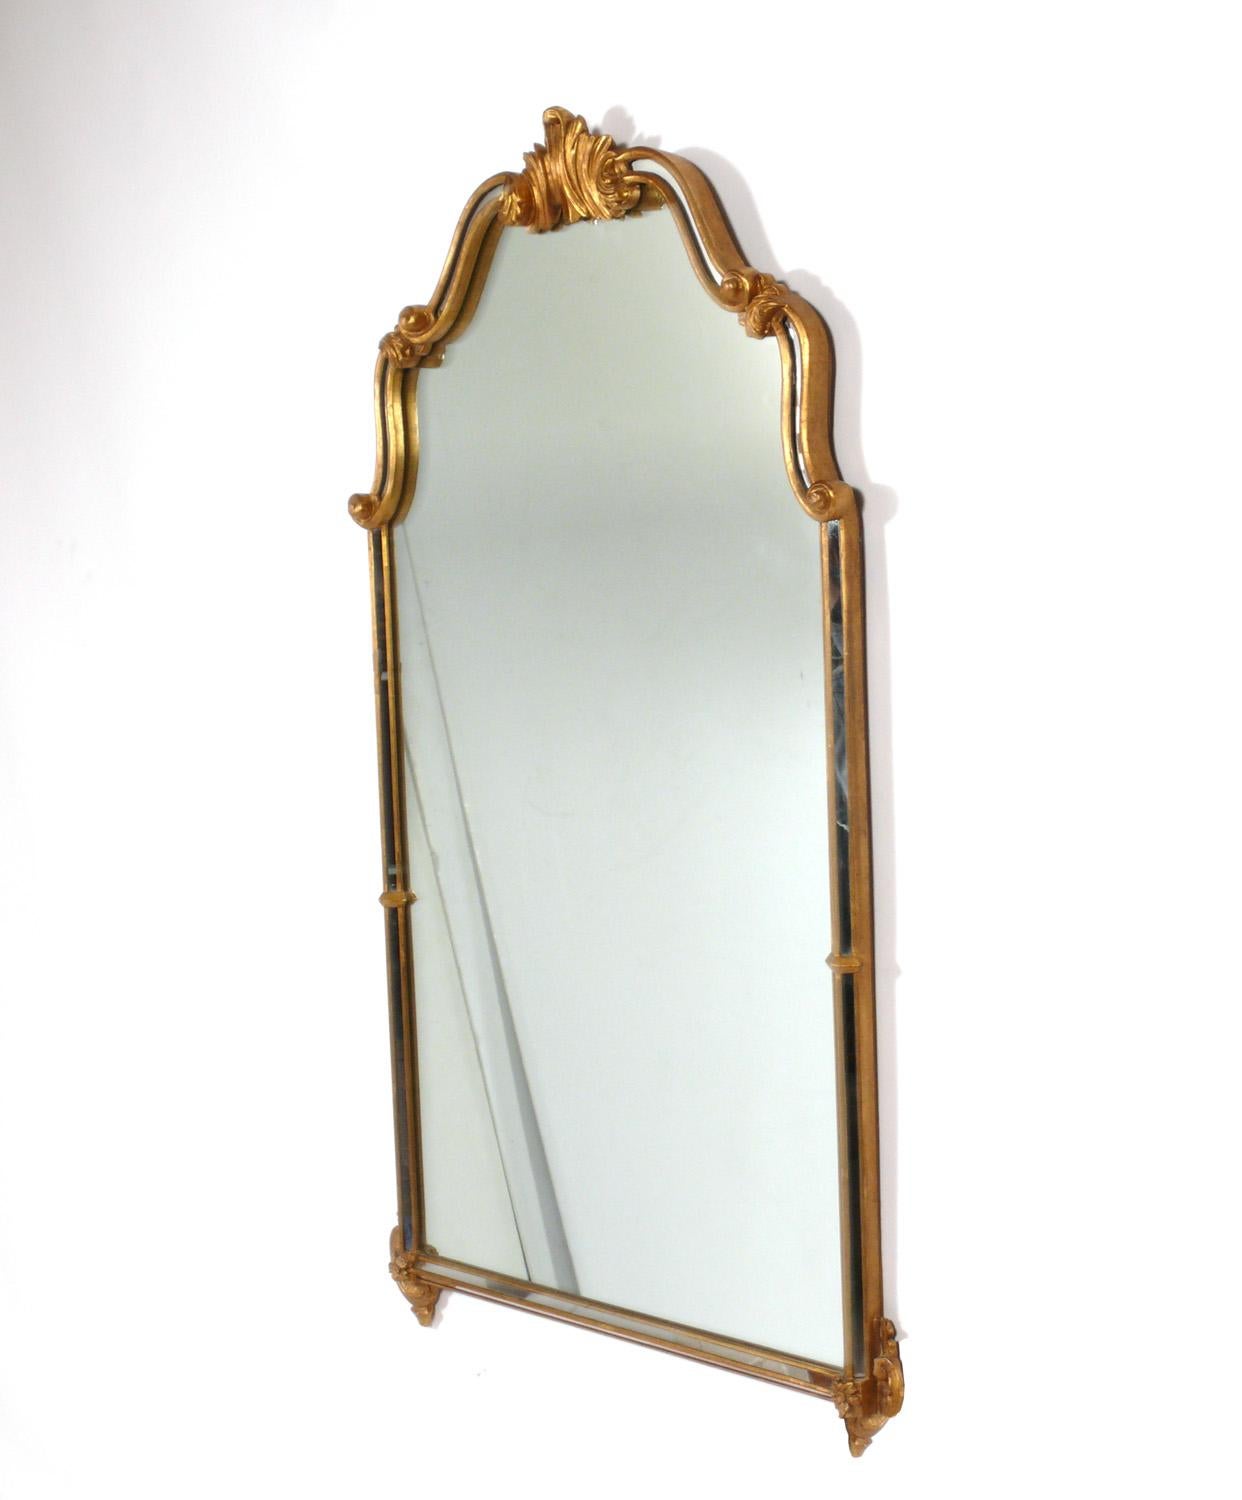 Rococo style gilt mirror, probably American, circa 1960s. Elegant form retaining warm original patina to the gilt wood frame. It measures an impressive 49.5